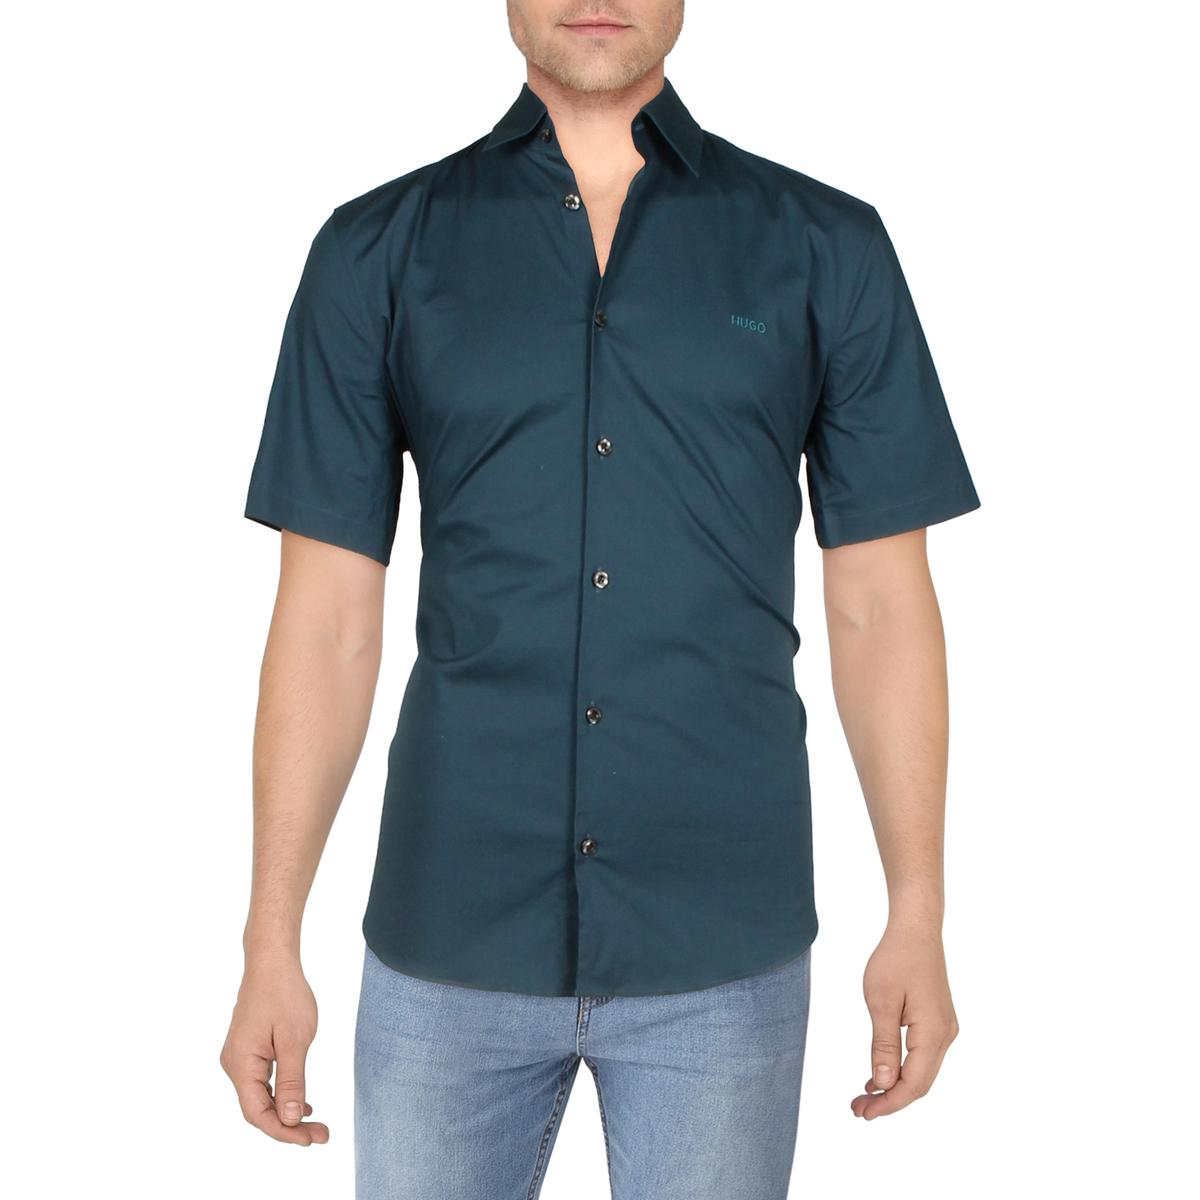 Hugo Mens Slim Fit Collared BHFO Button-Down Woven 7037 | eBay Shirt